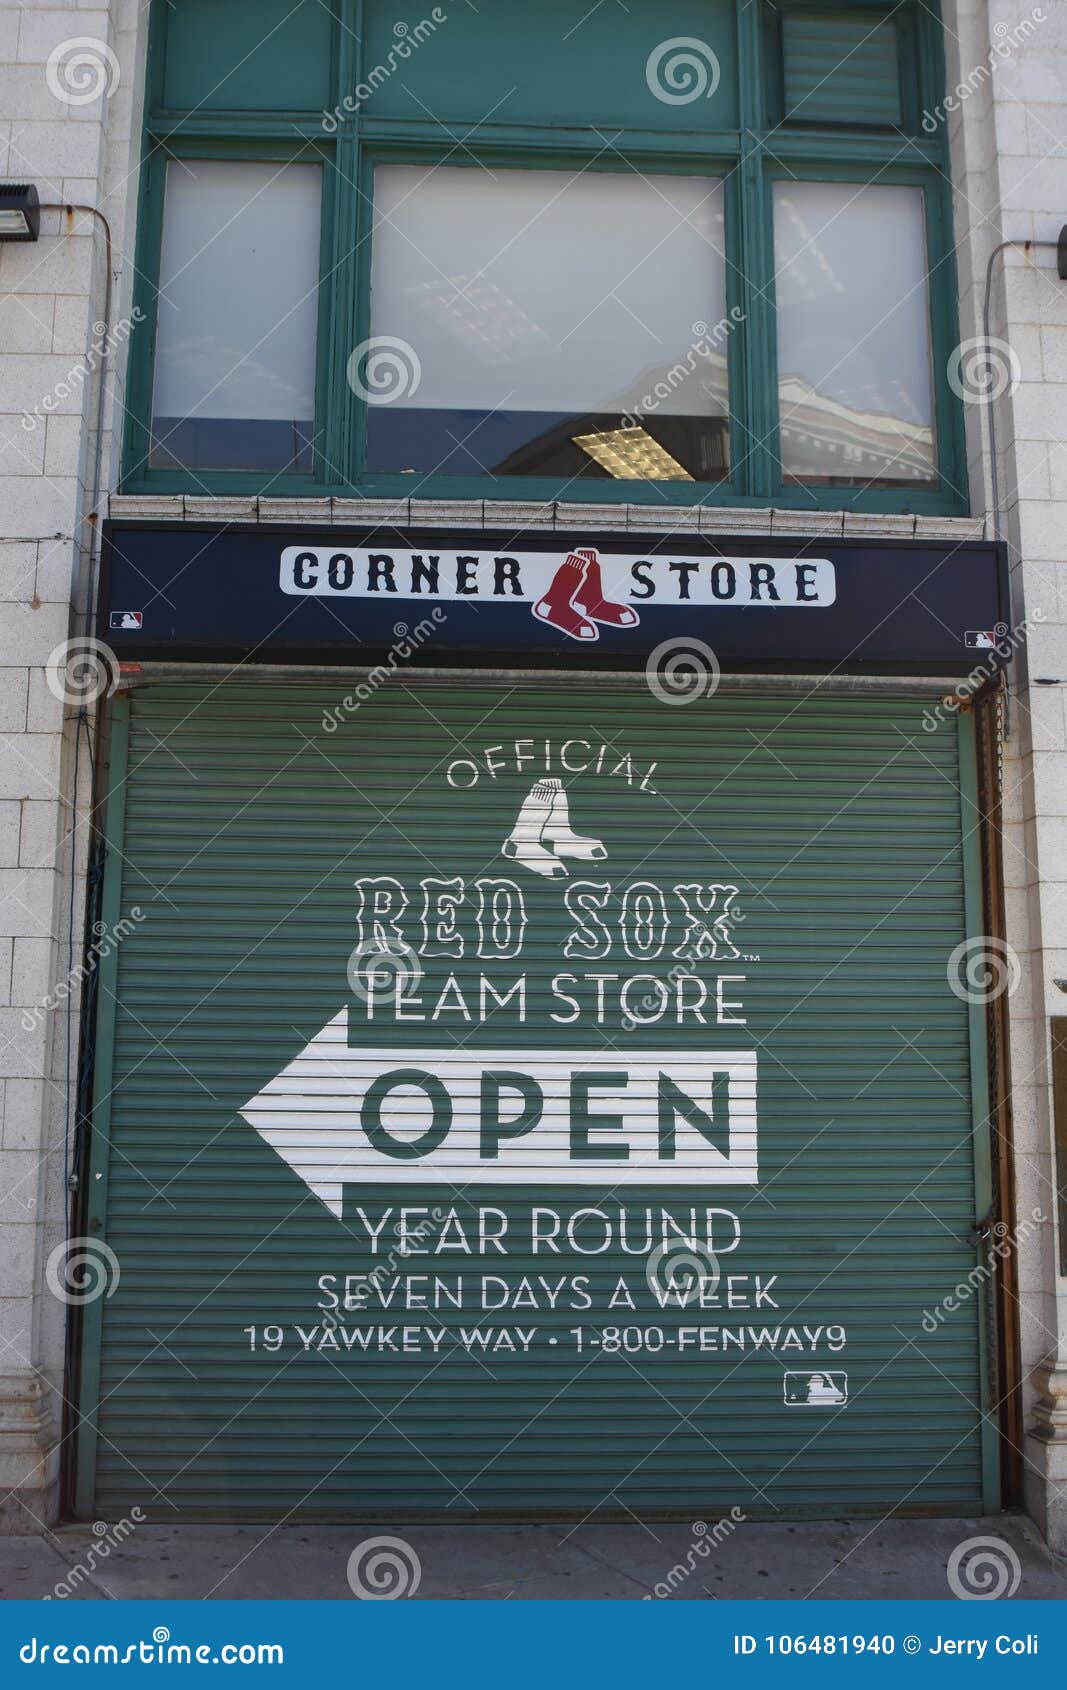 Corner Store, Fenway Park, Boston, Editorial Image - Image jerseys: 106481940